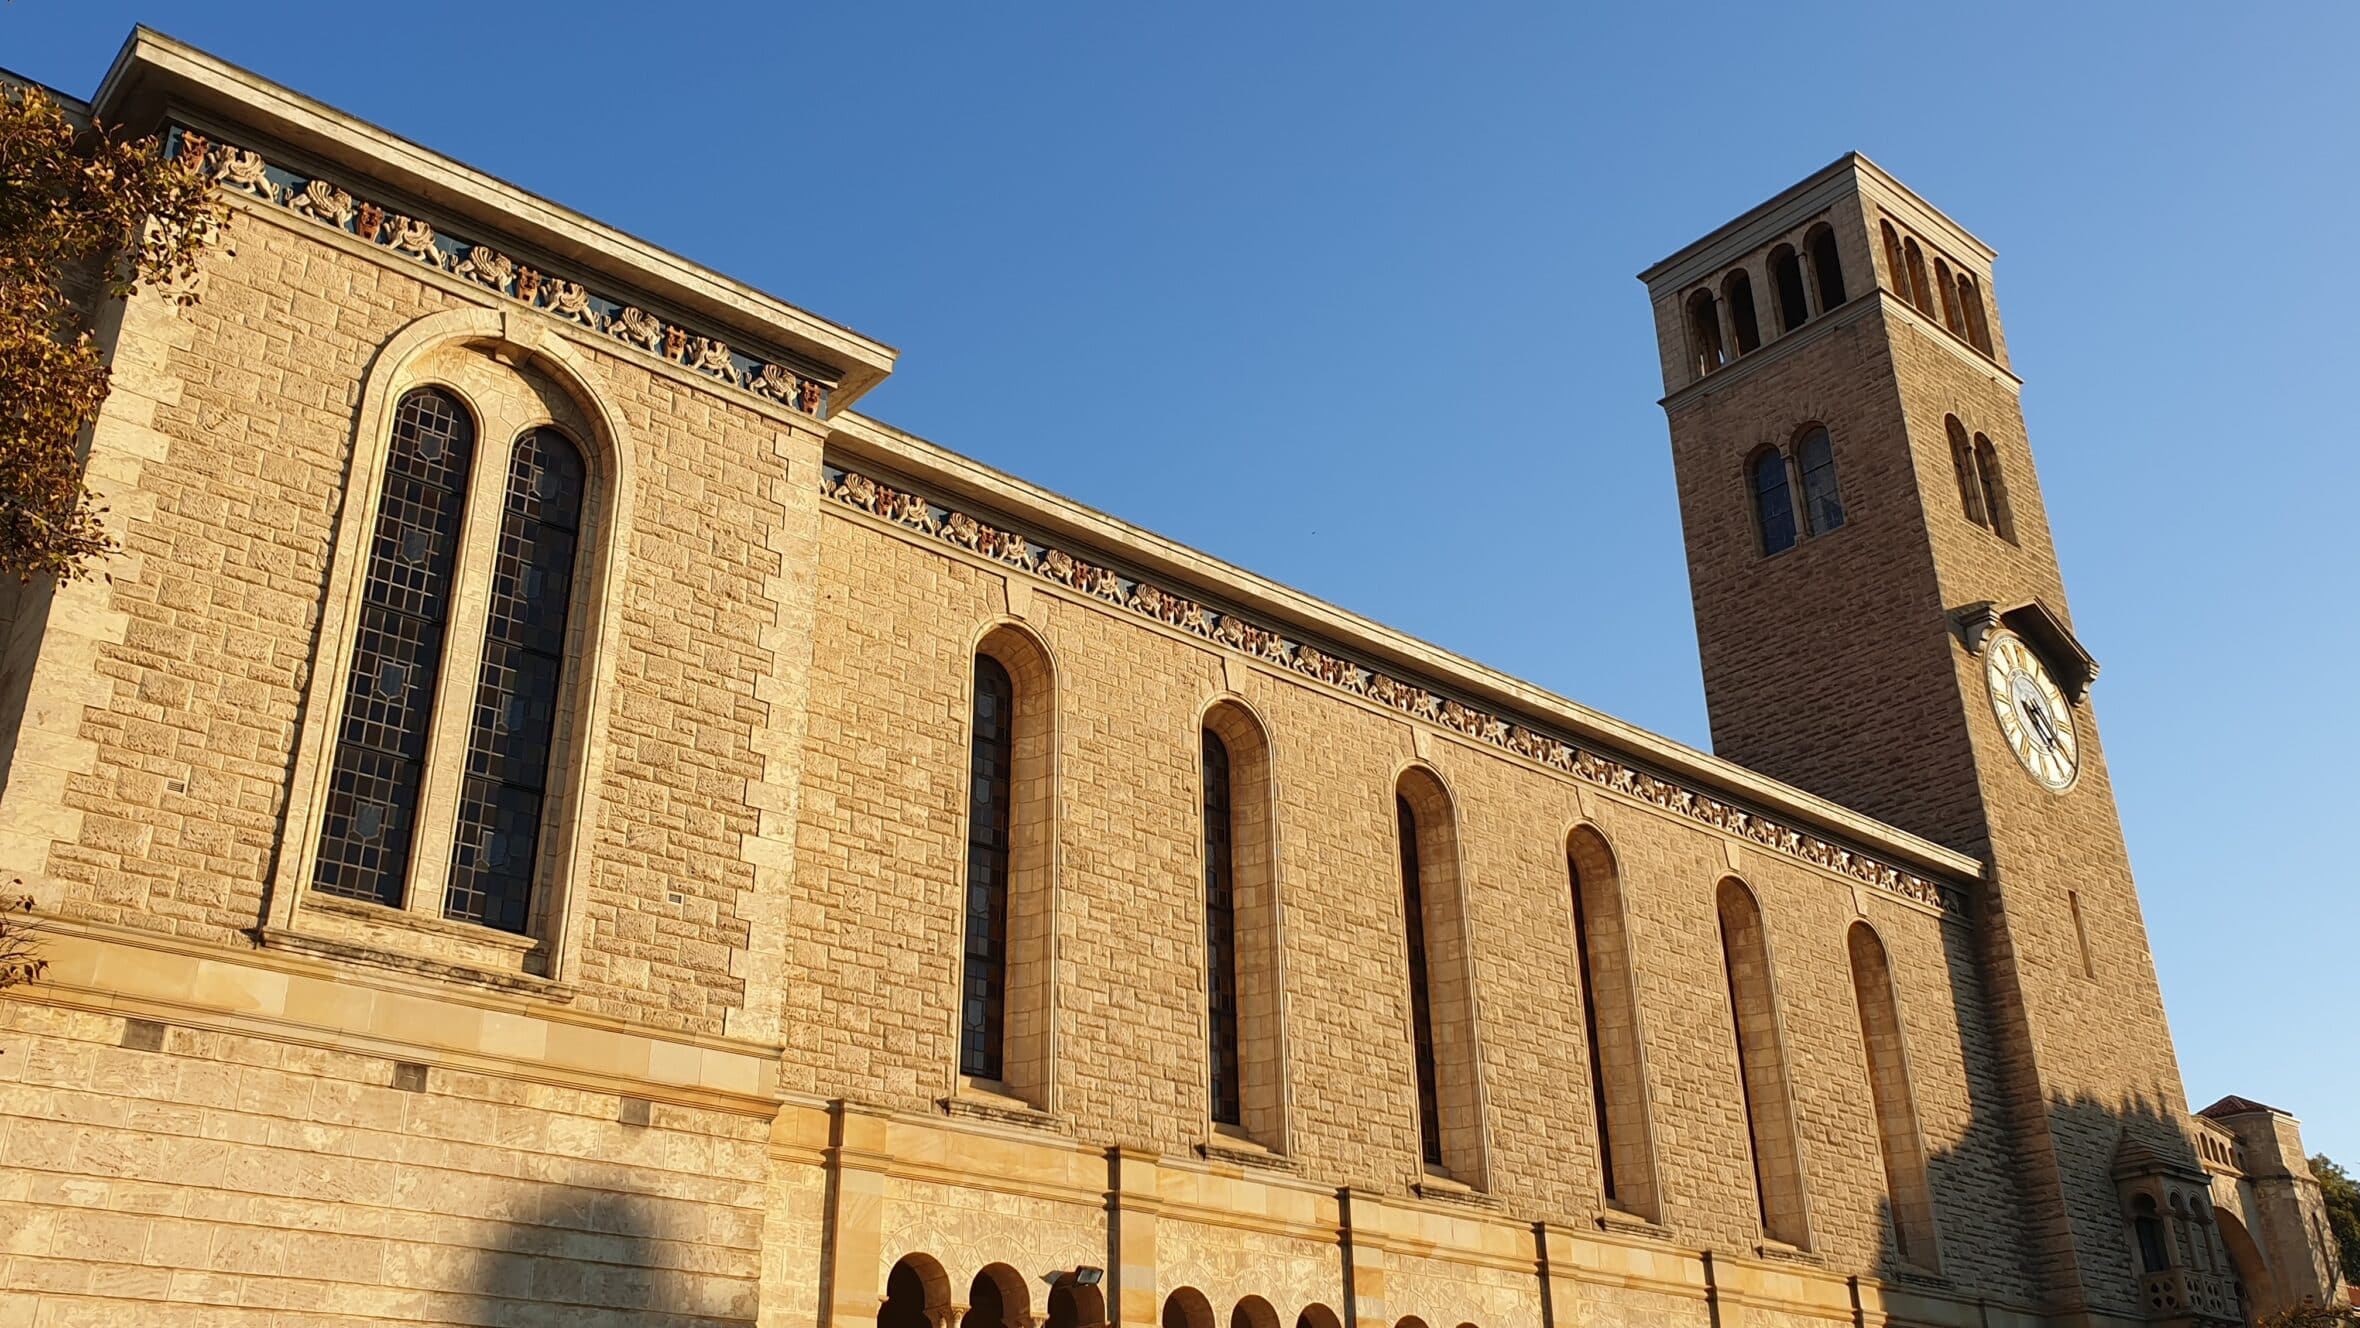 Facade of The University of Western Australia